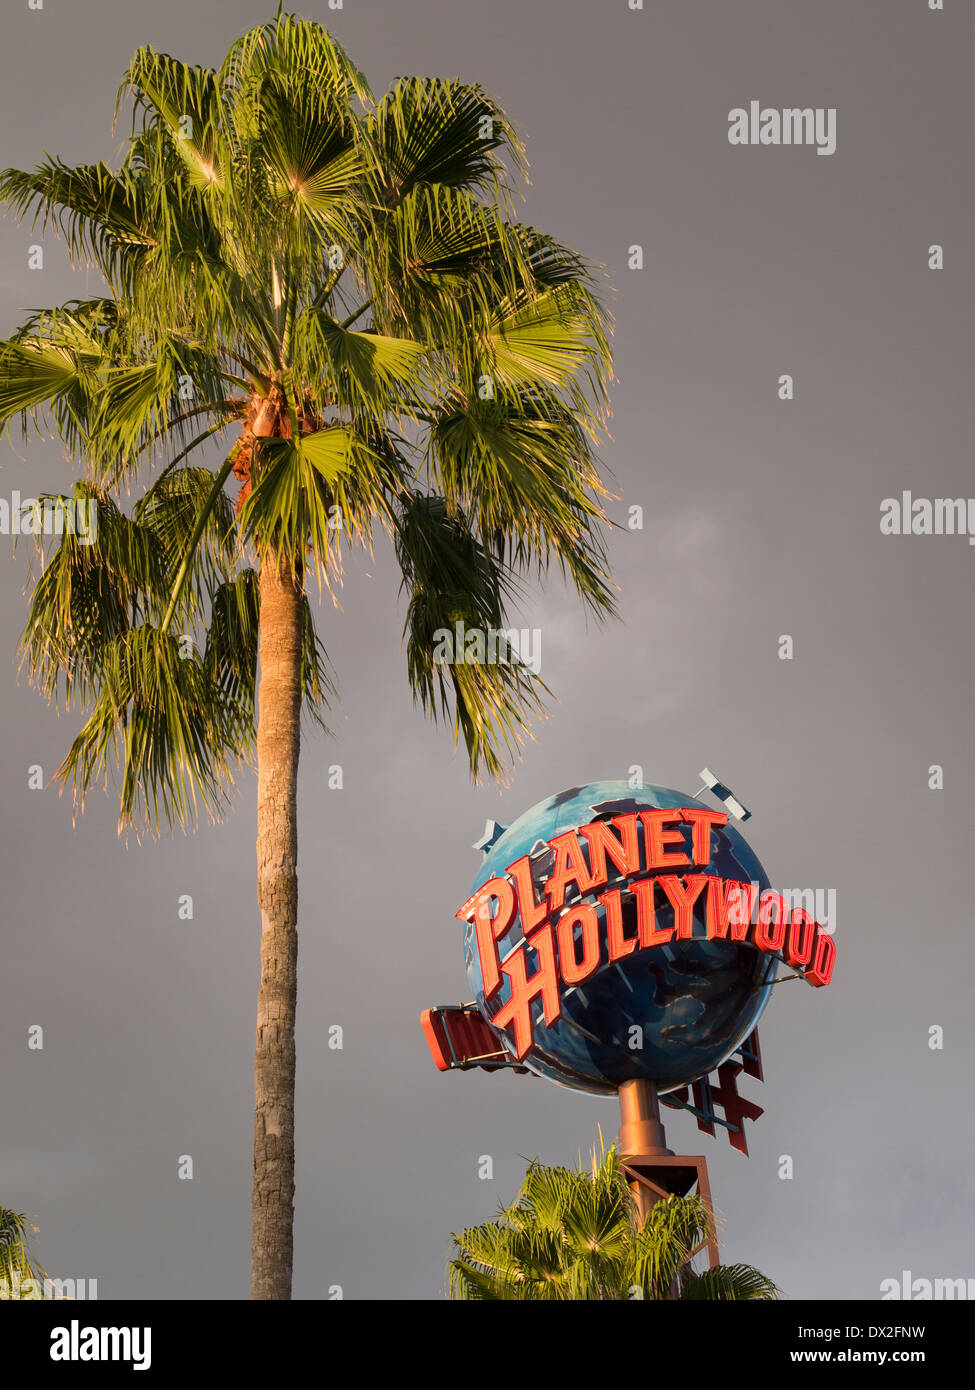 Planet Hollywood, Orlando, Florida Stock Photo